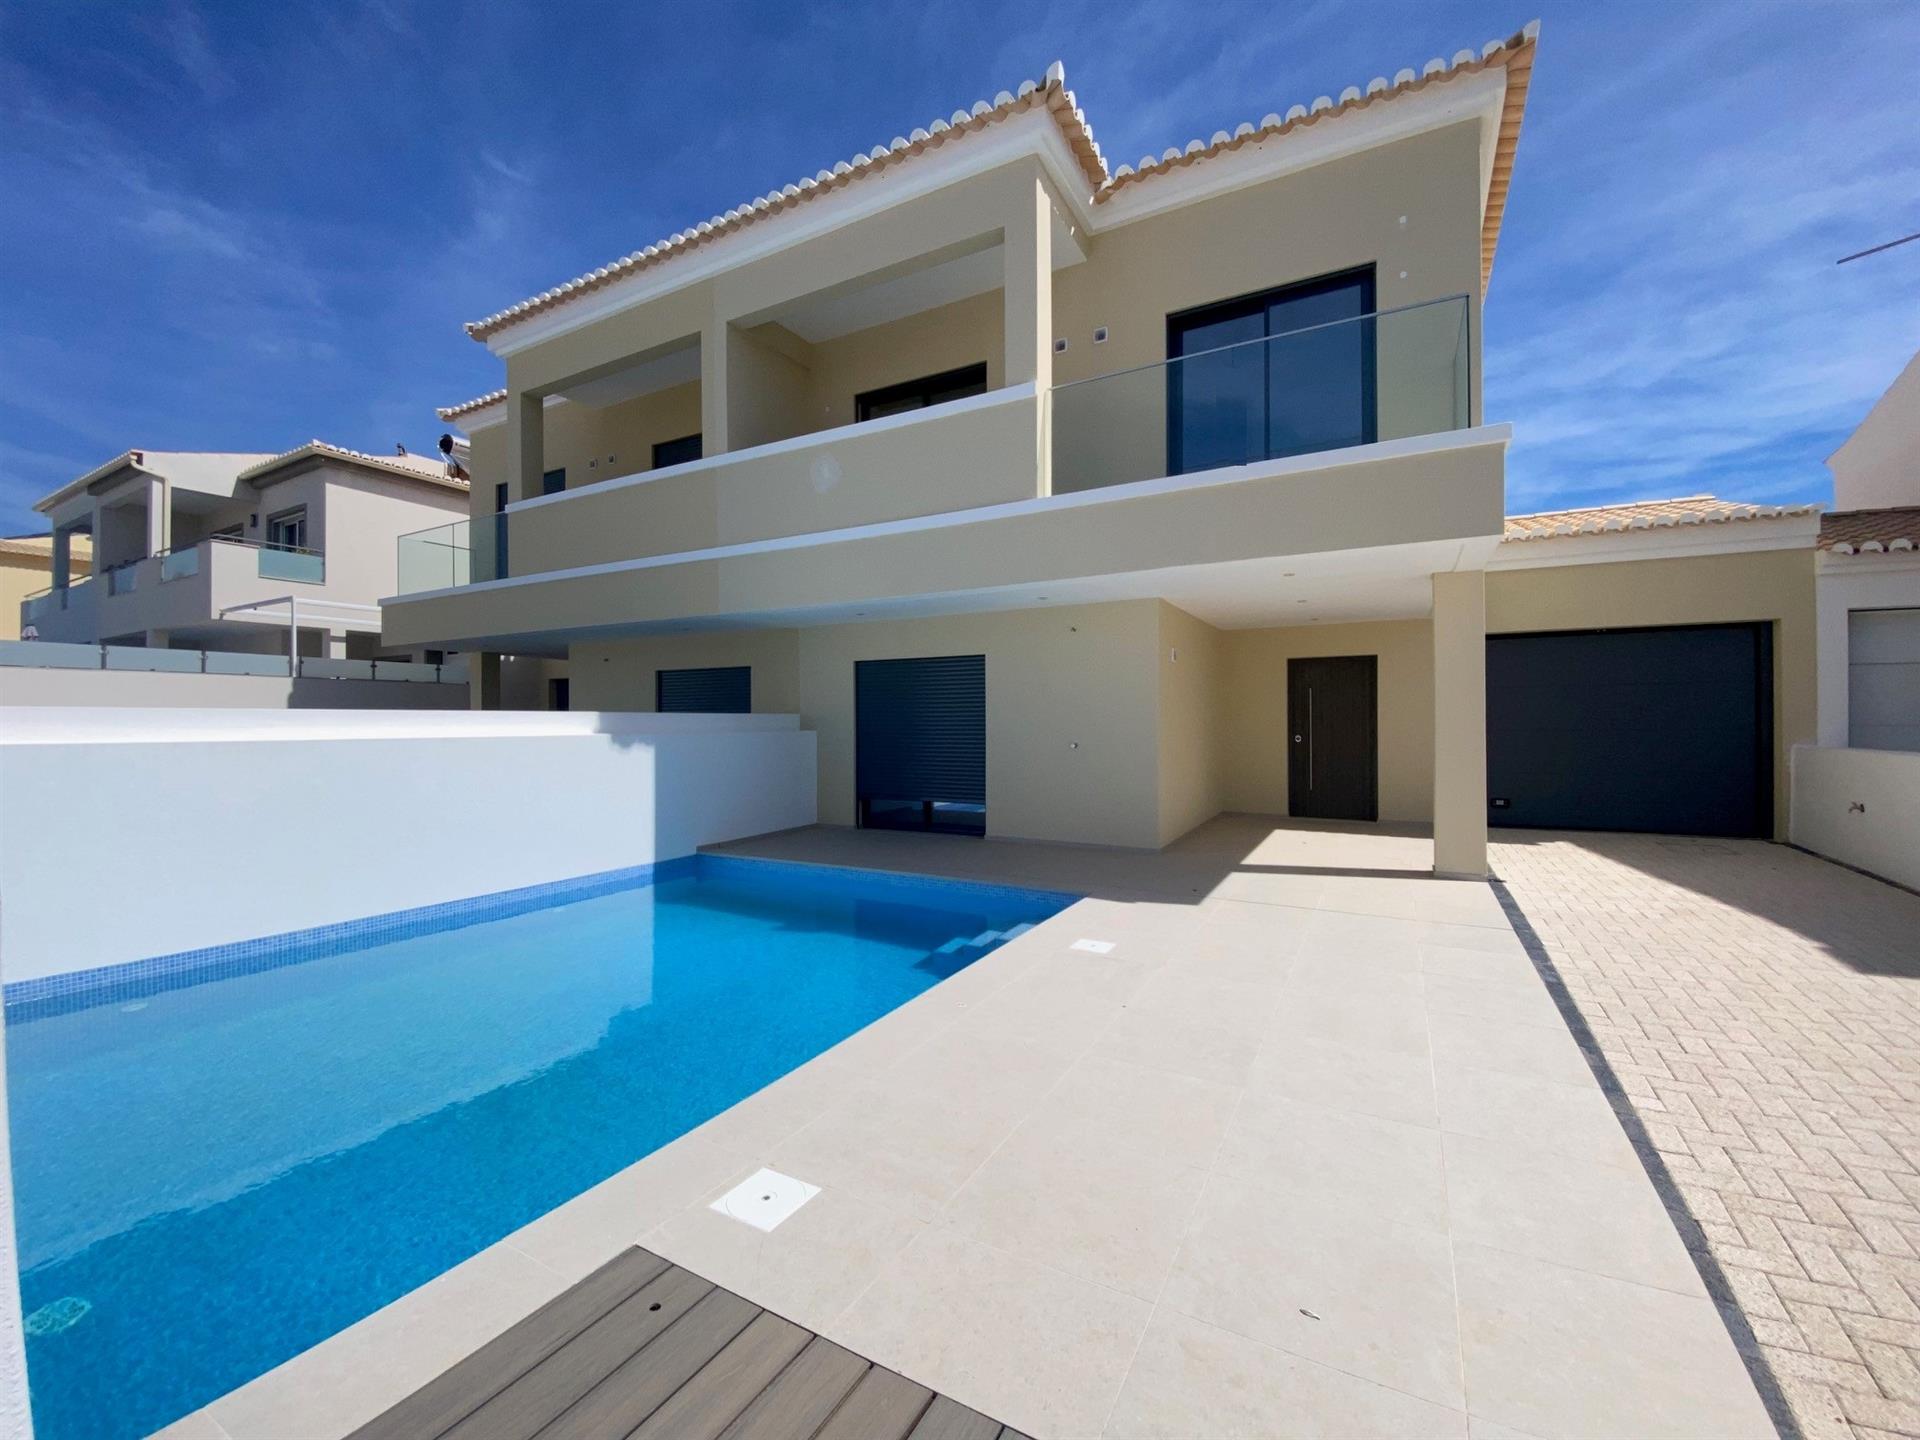 New villa in Porto de Mós - Lagos, featuring pool and garage